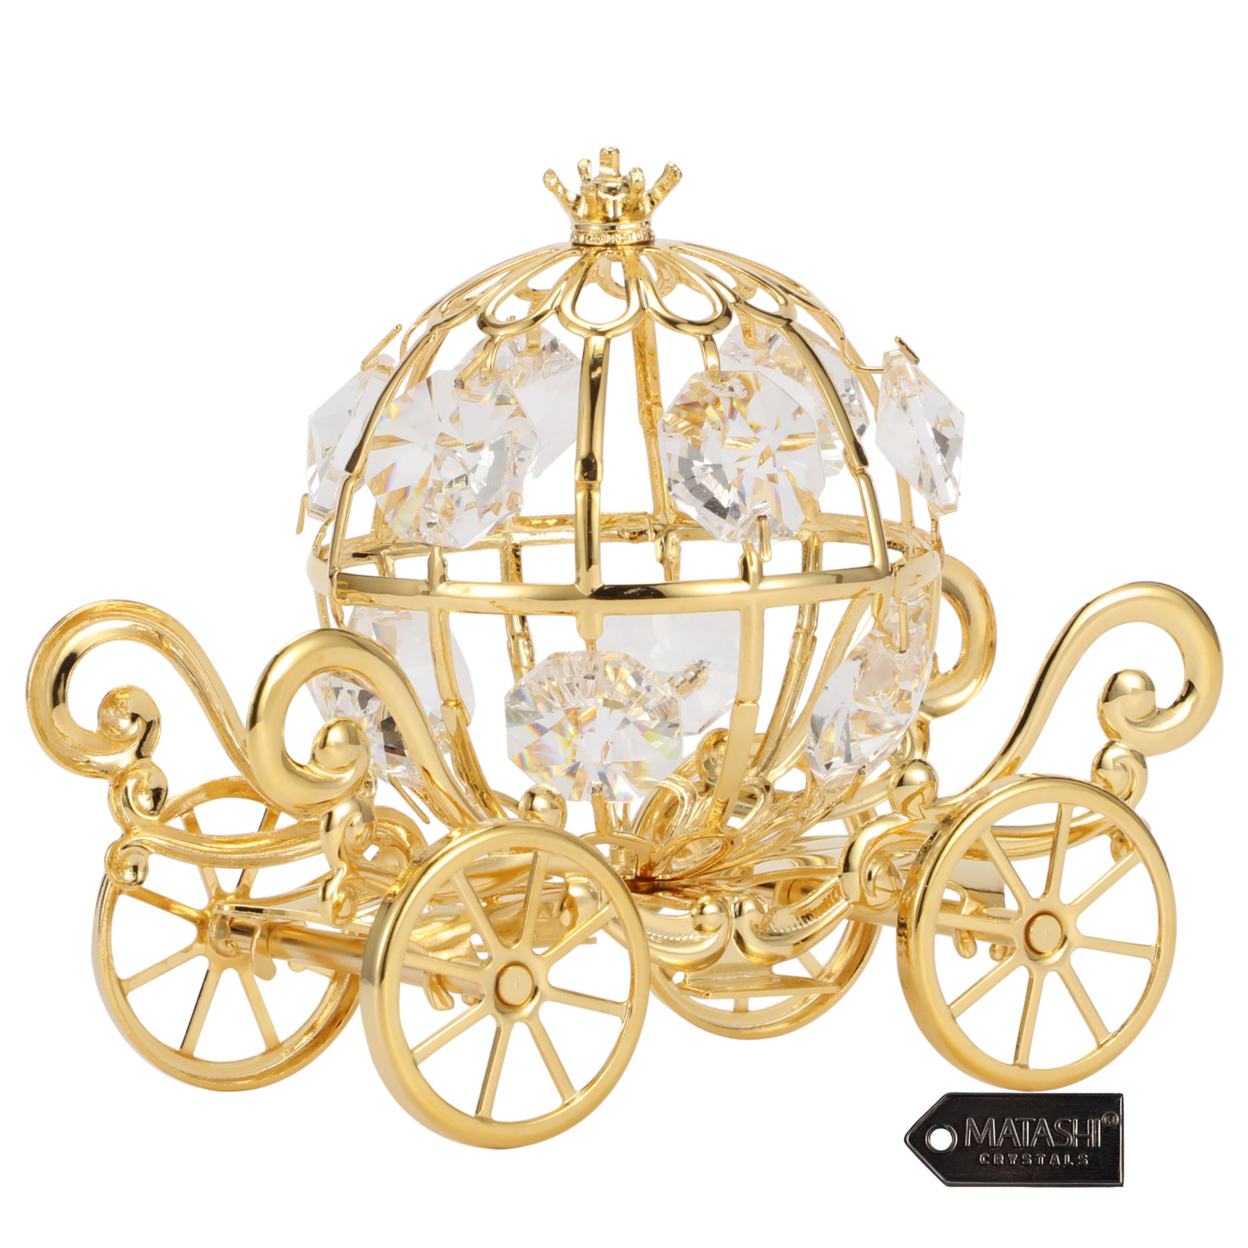 Matashi 24K Gold Plated Crystal Studded Small Cinderella Pumpkin Coach Ornament